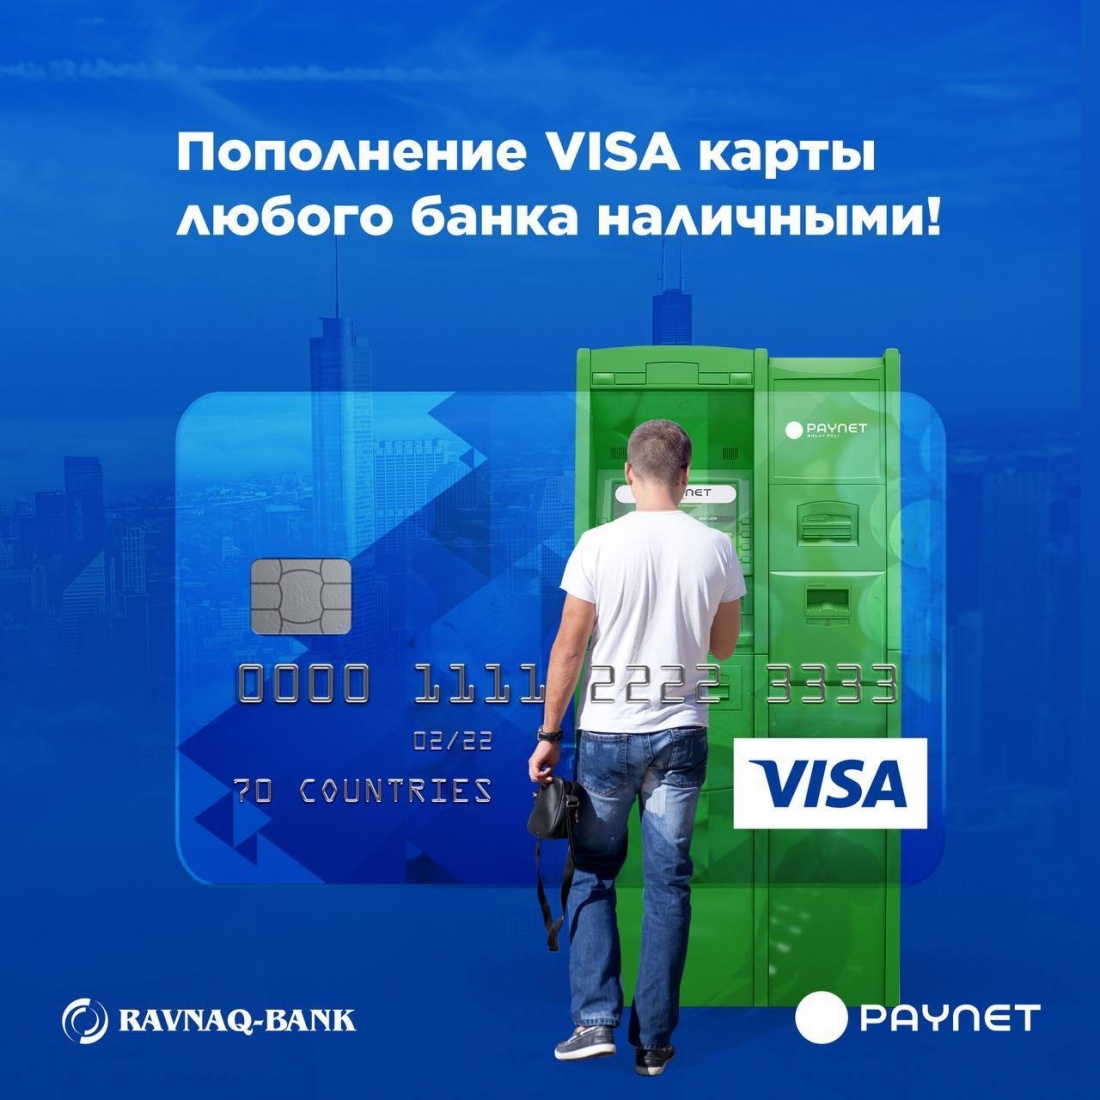 Пополние карты VISA  вместе с Ravnaq-bank и Paynet.